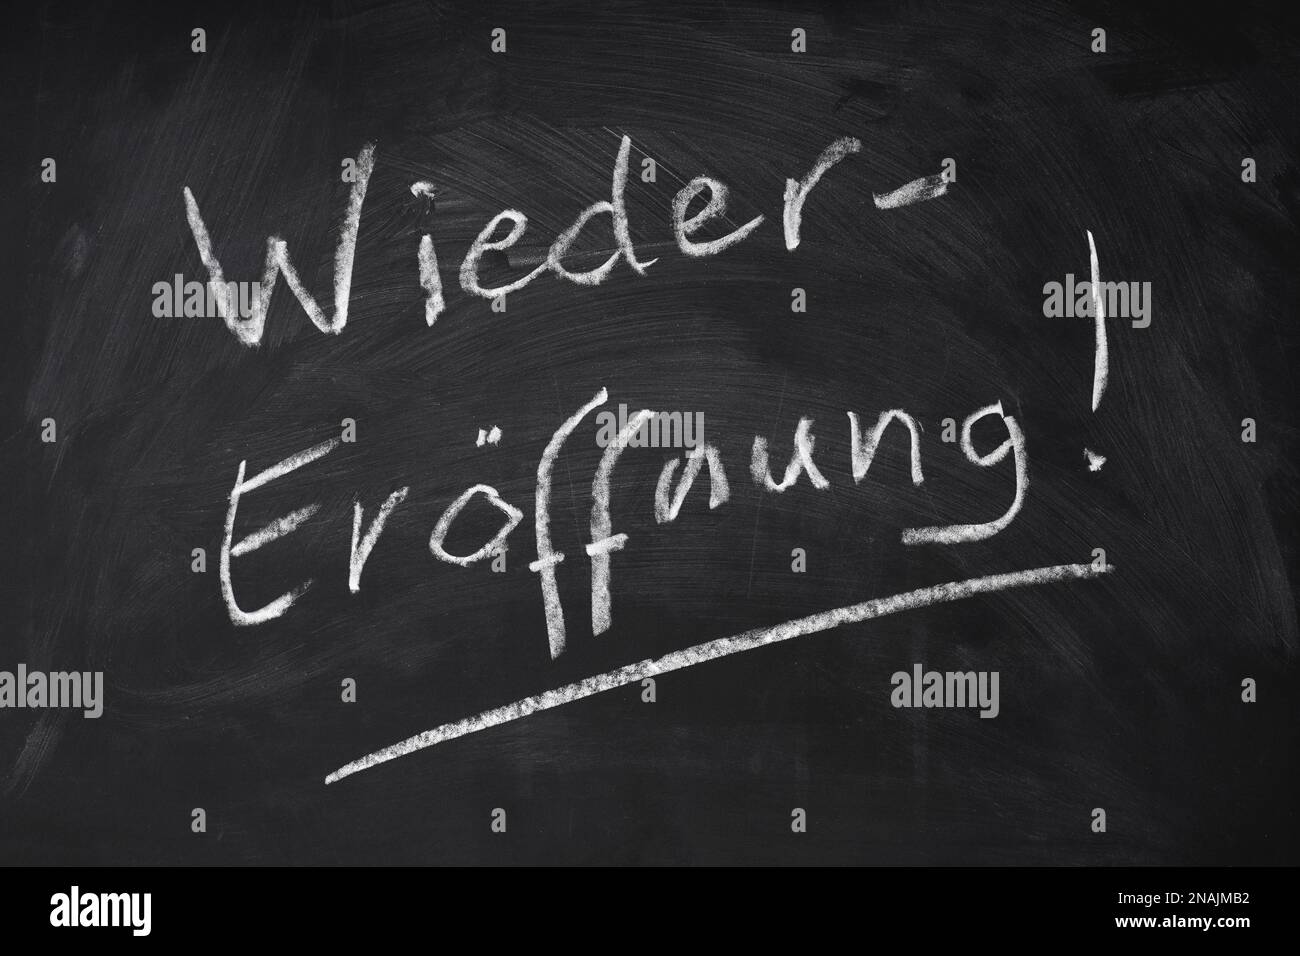 Wiedereroeffnung means reopening in German - handwritten text on chalkboard sign Stock Photo